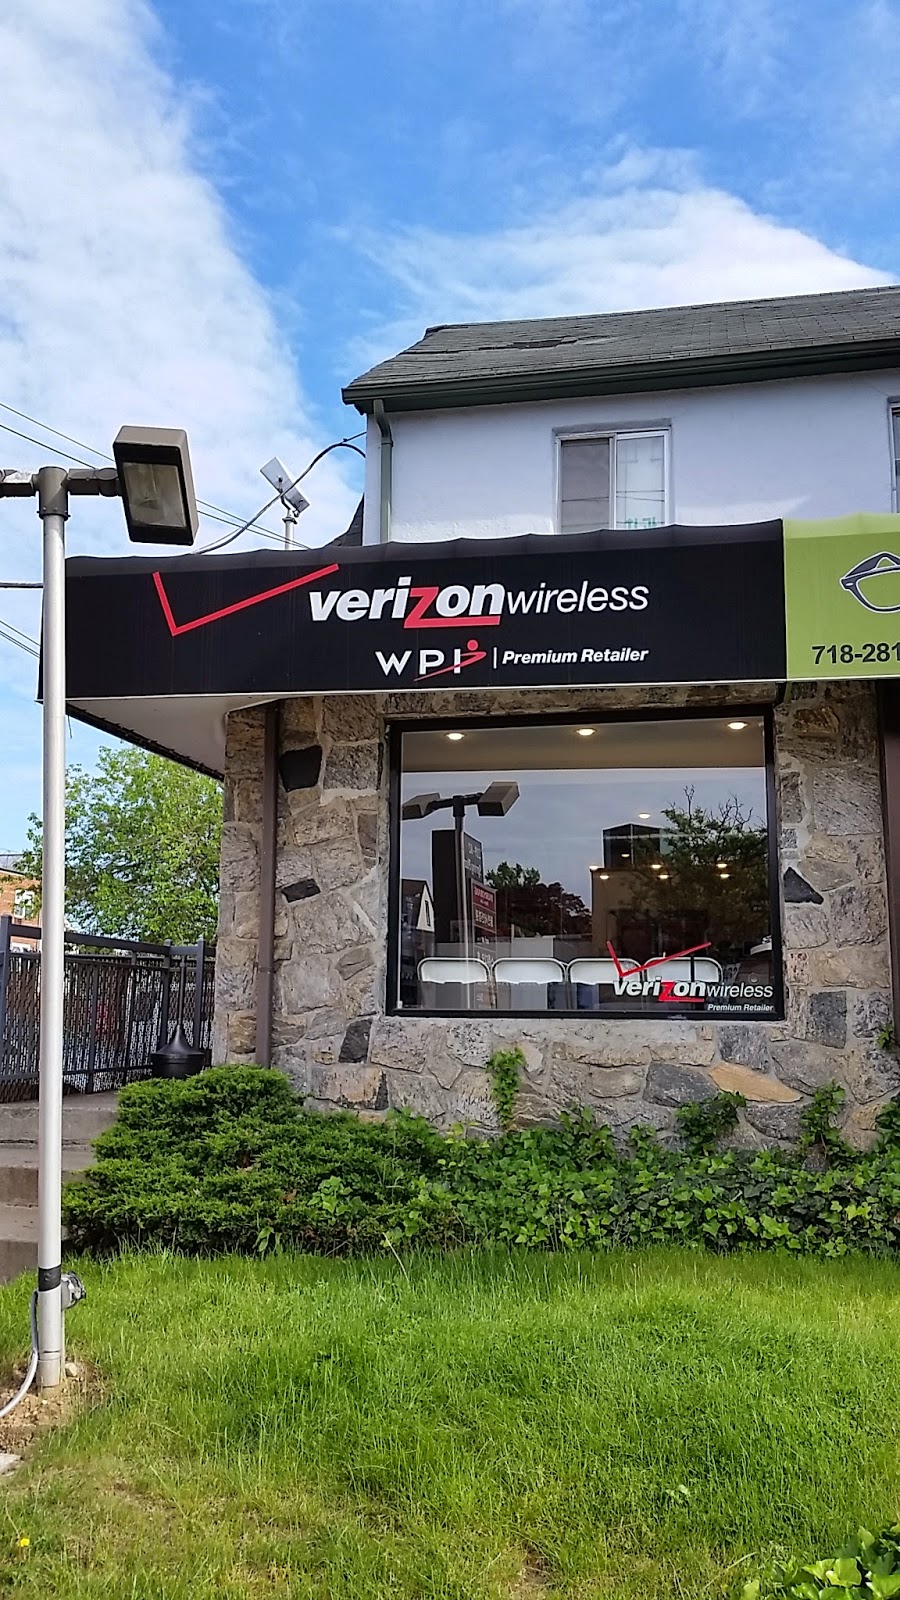 Photo of WPI Verizon Wireless Premium Retailer in Bayside City, New York, United States - 1 Picture of Point of interest, Establishment, Store, Electronics store